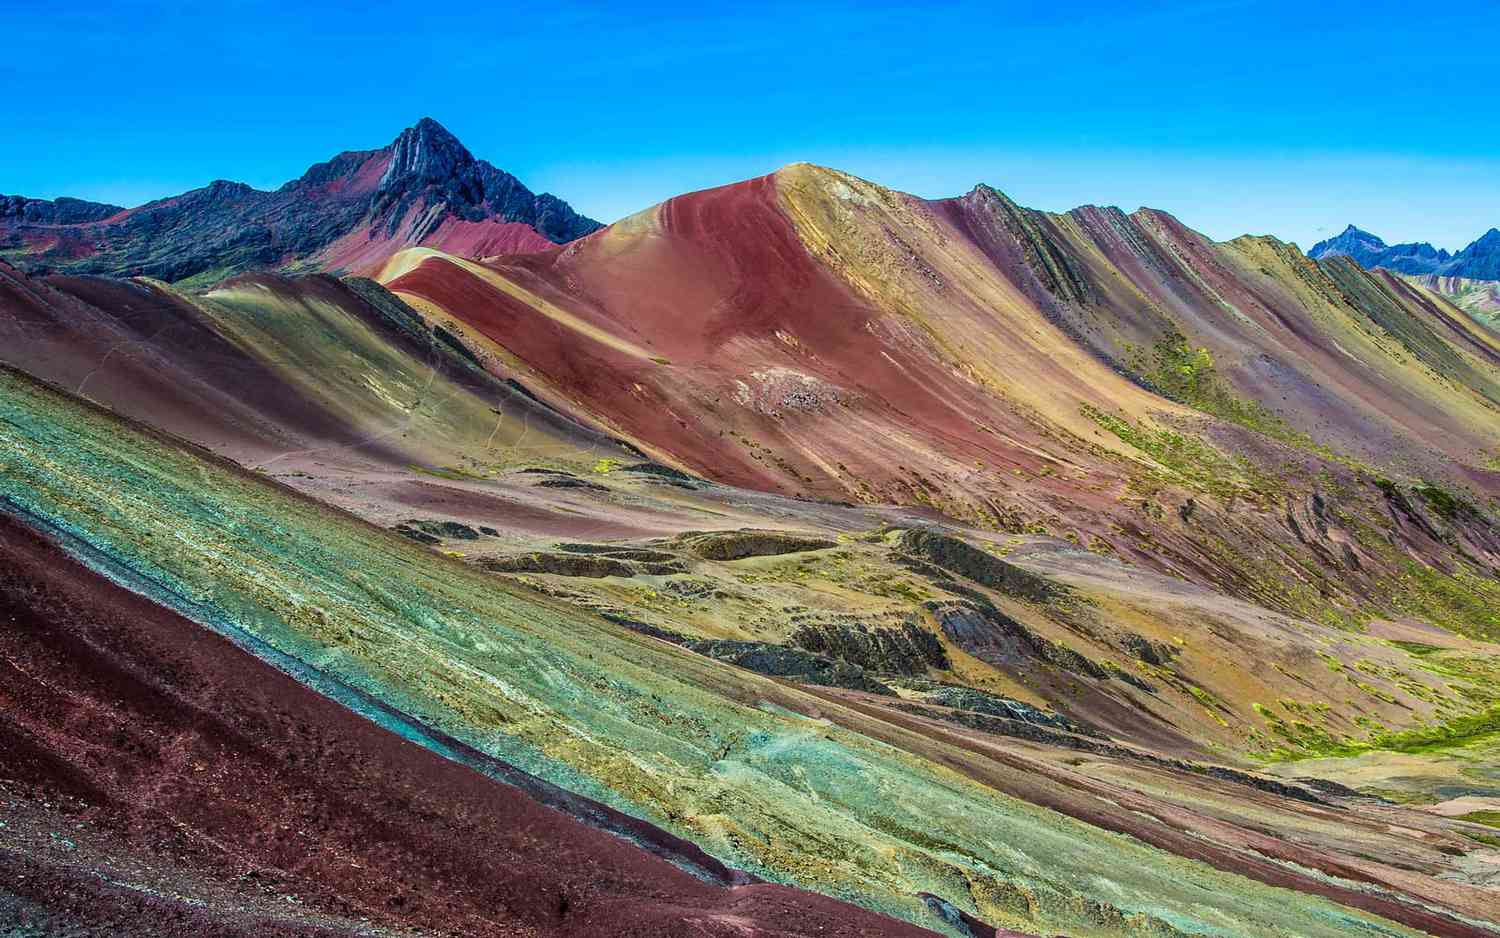 Vinicunca, Mountain of Seven Colors